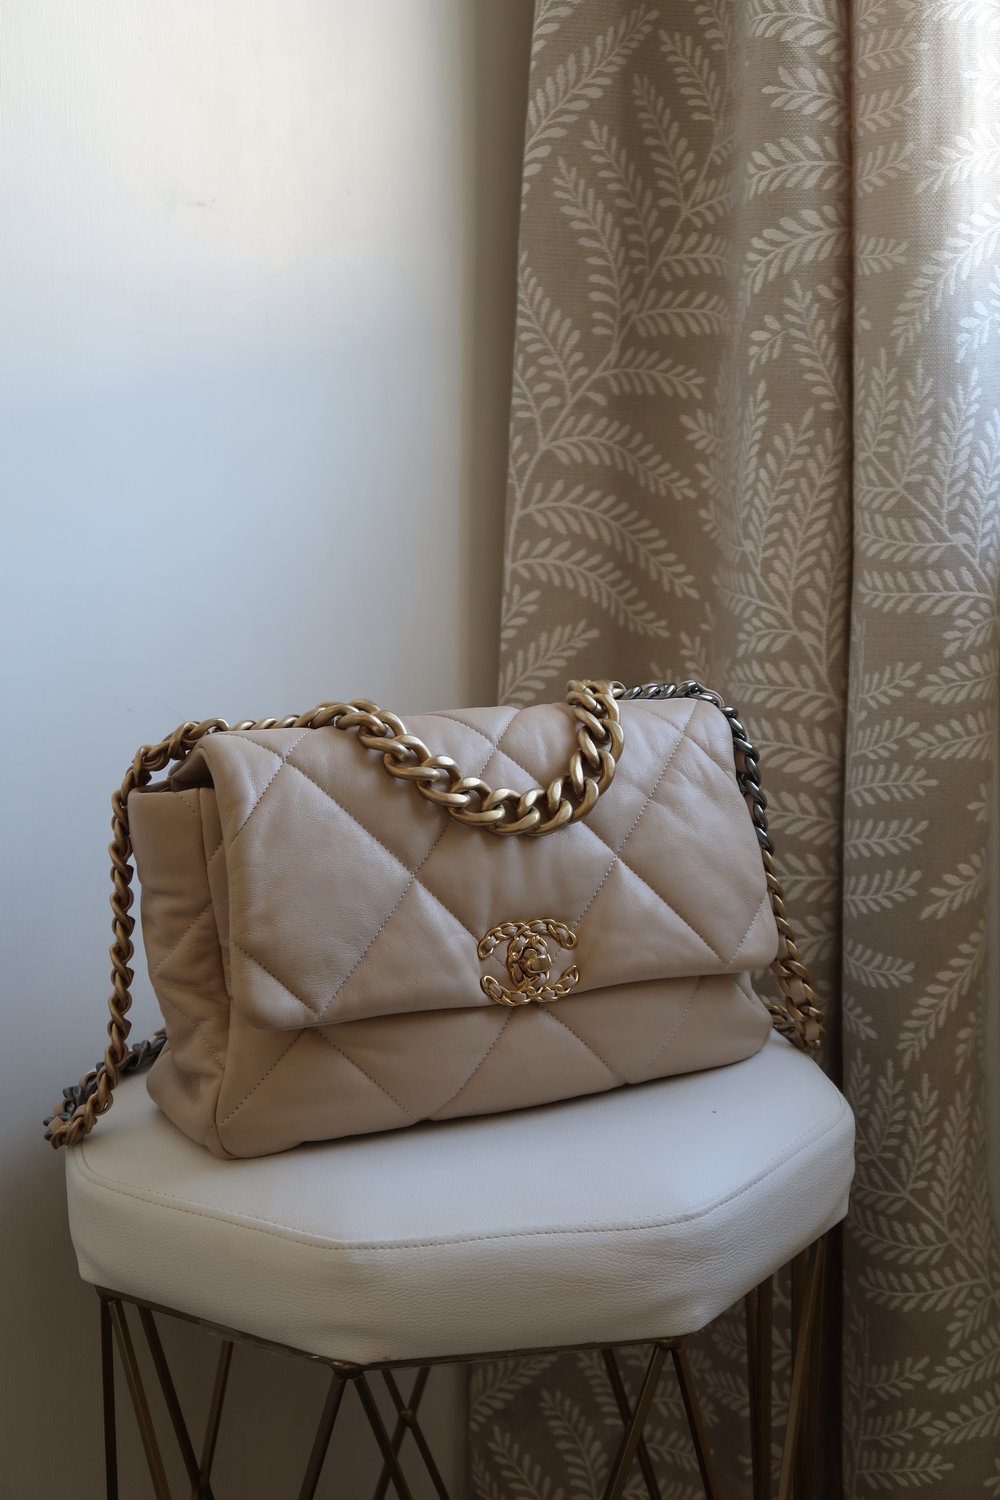 Chanel 19 Beige Flap Bag — Blaise Ruby Loves